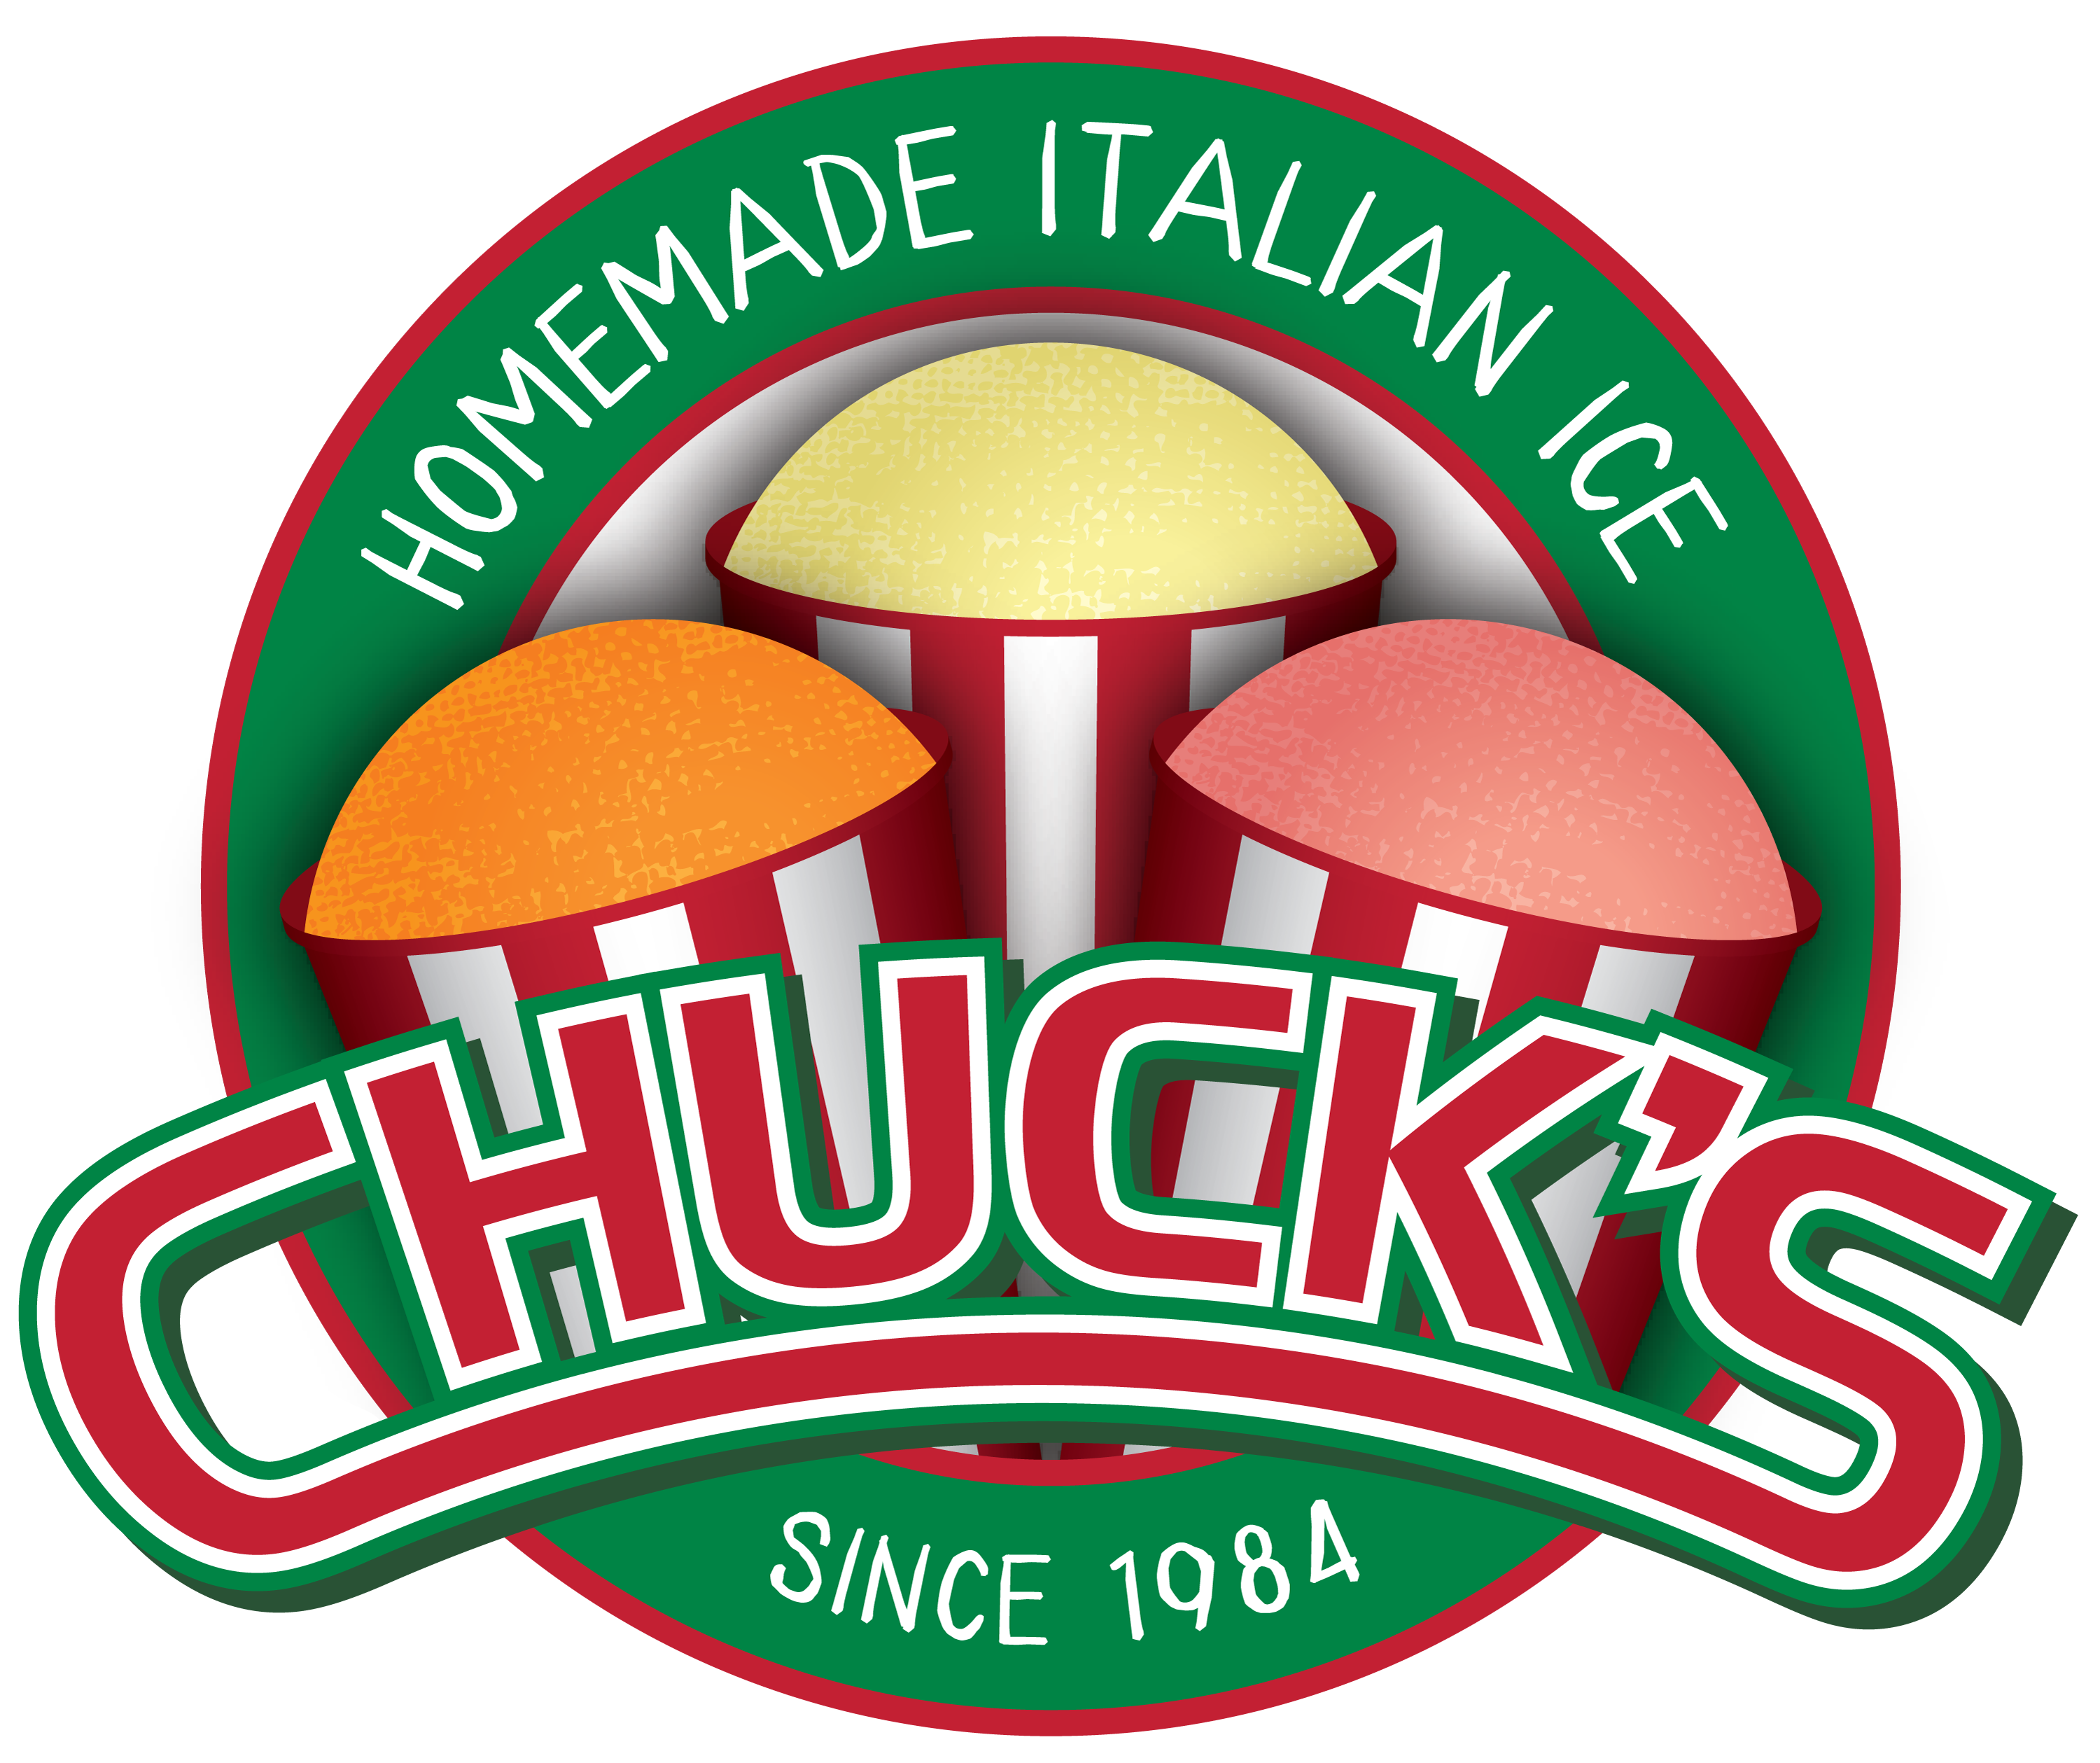 Chucks Logo Full